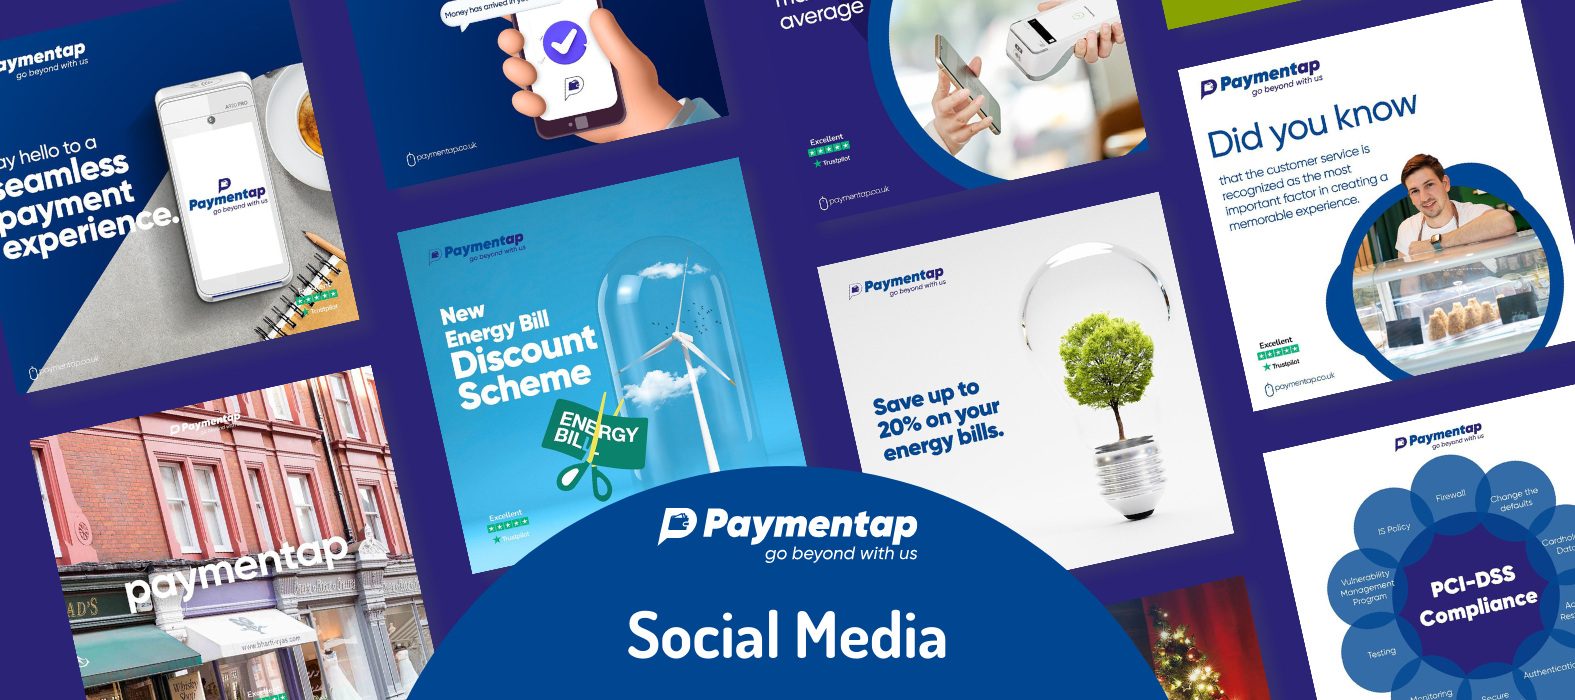 paymentap social media images